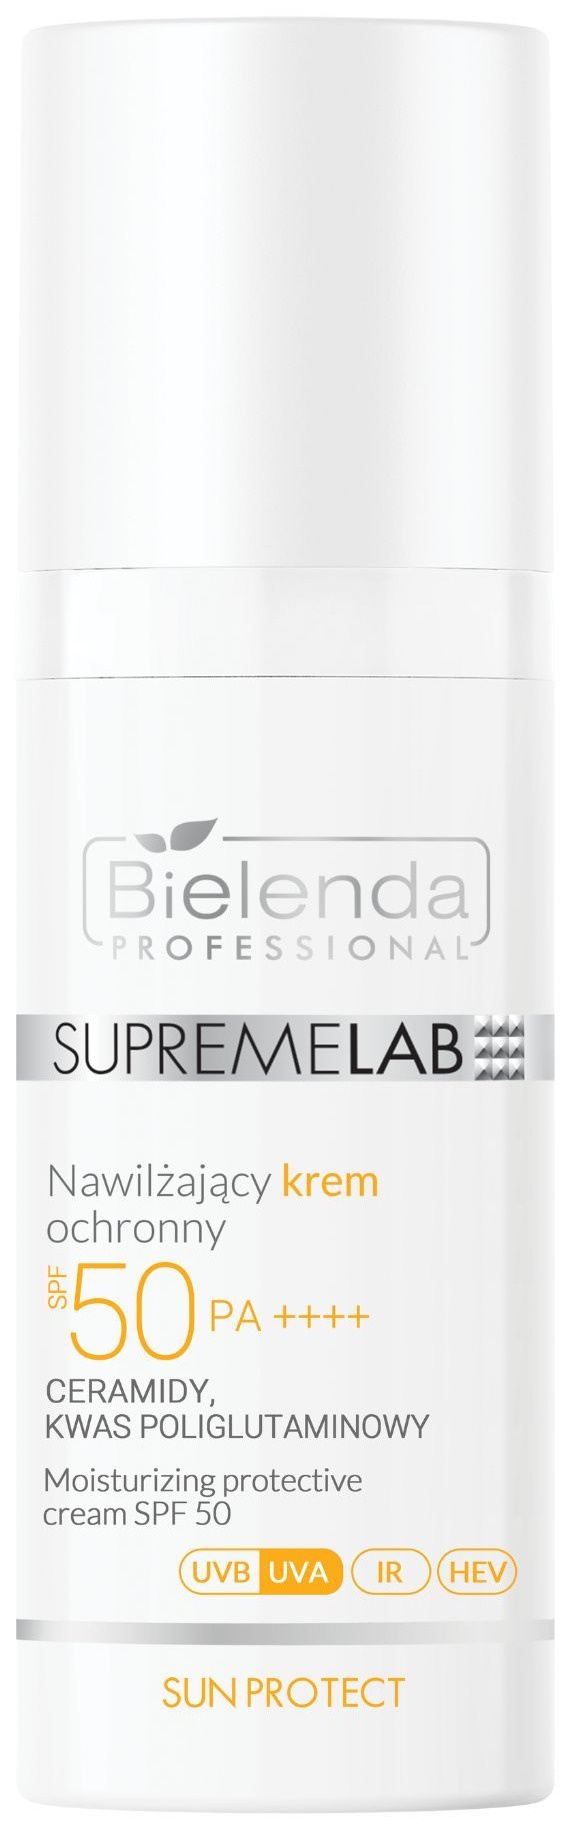 Bielenda Professional Supremelab Sun Protect Moisturizing Protective Cream SPF 50